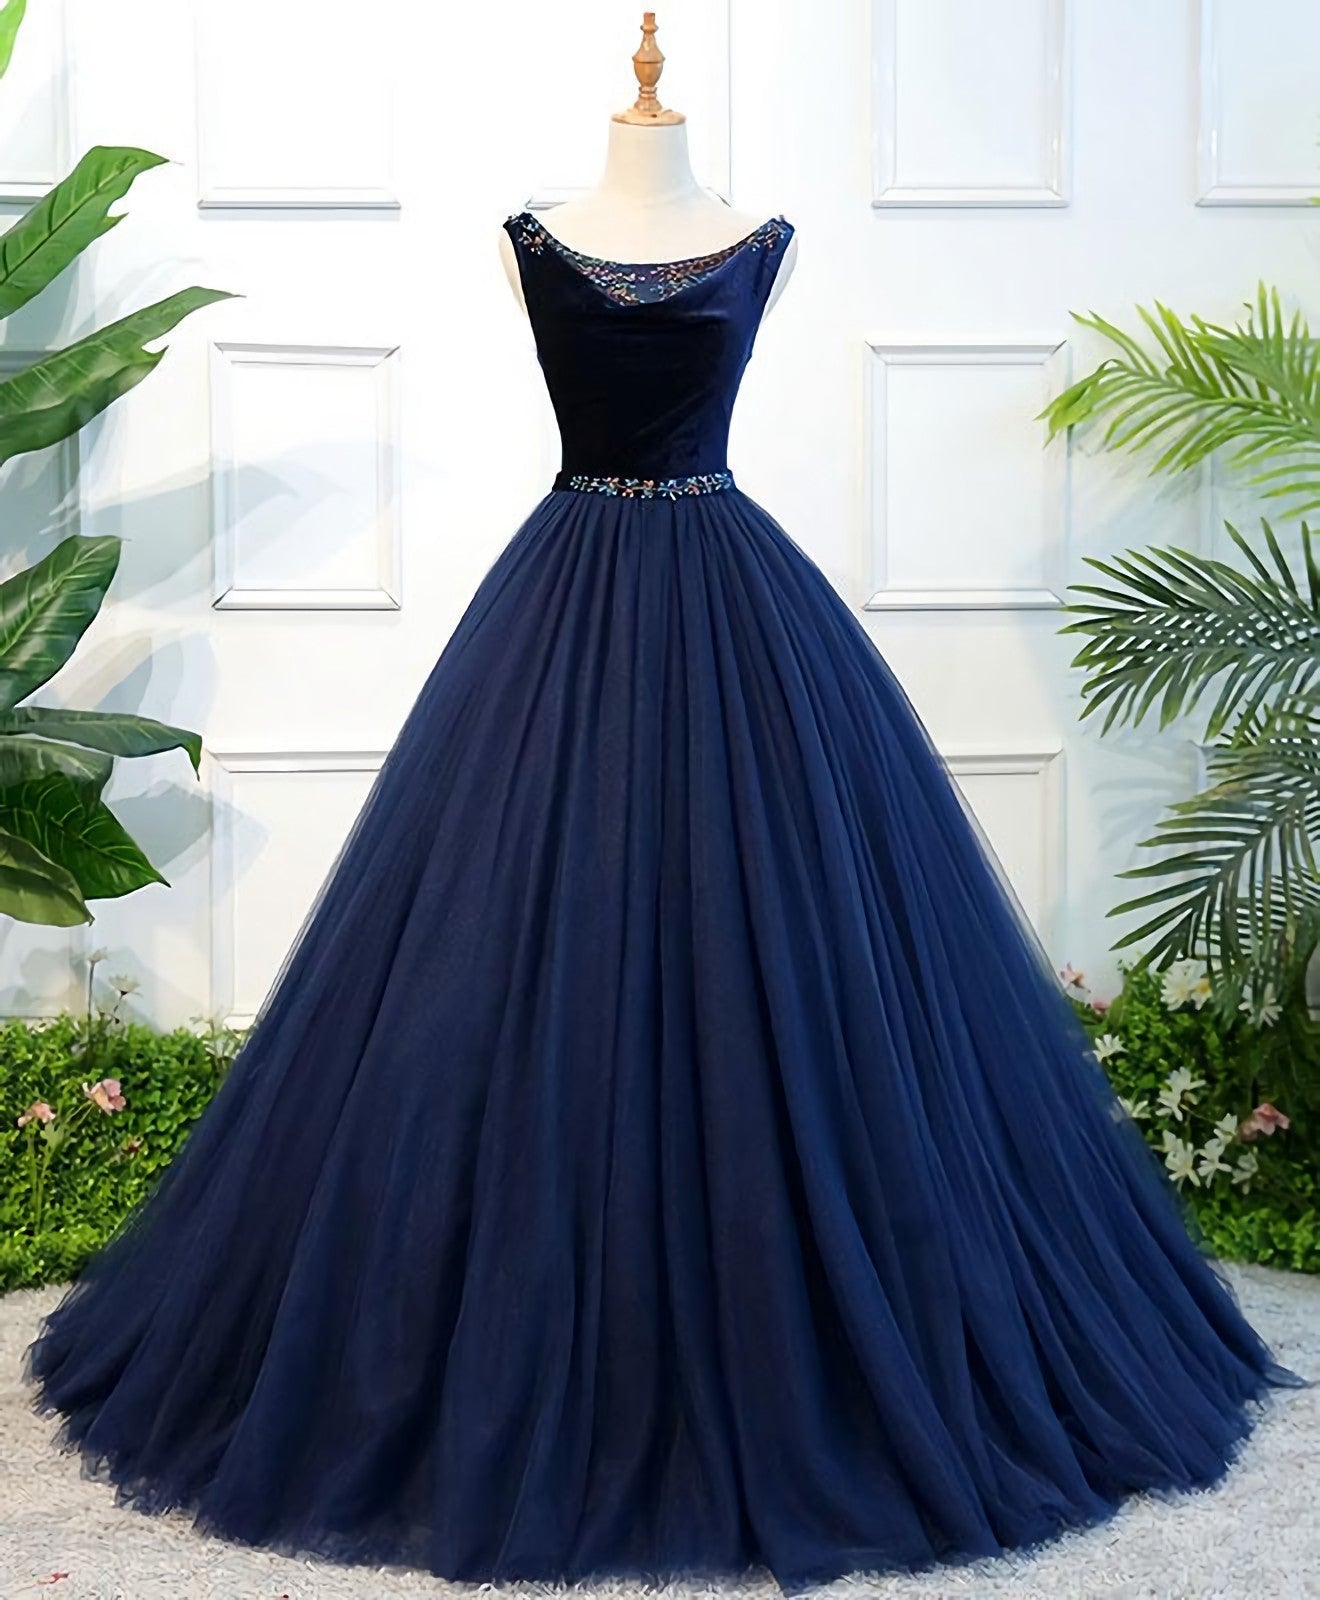 Dark Blue Tulle Long Corset Prom Dress, Dark Blue Tulle Evening Dress outfit, Evening Dresses Short